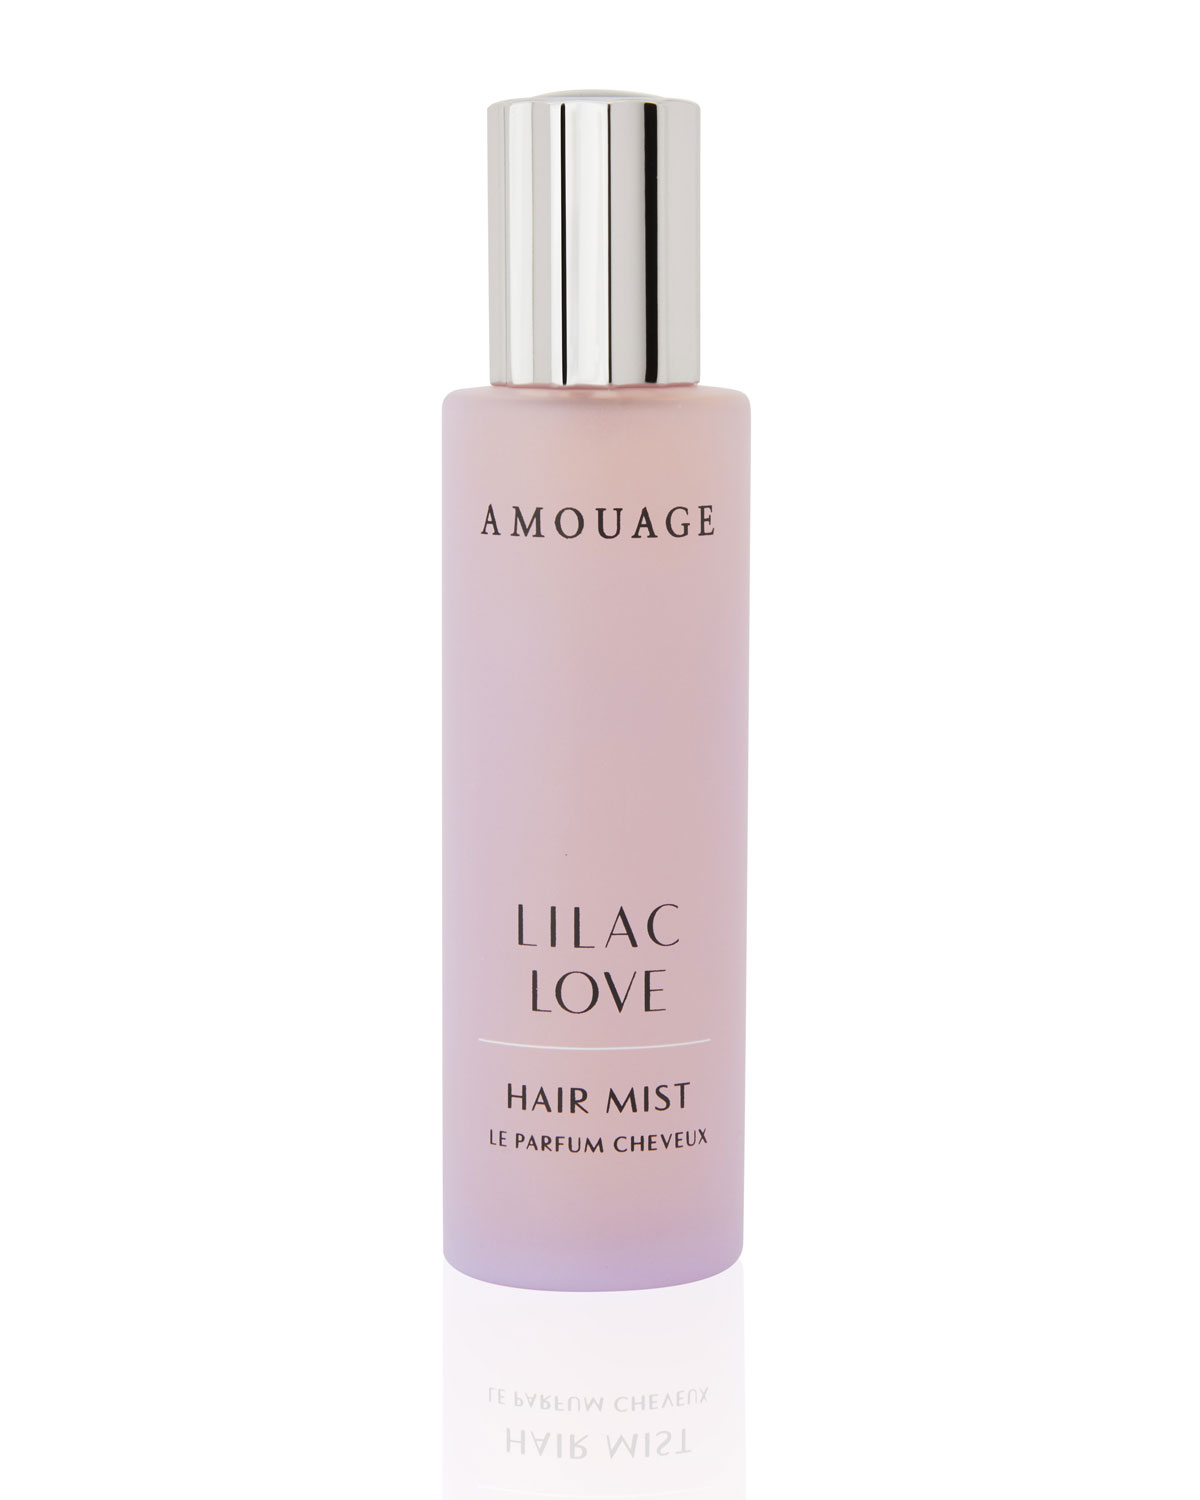 Amouage Lilac love hair mist 